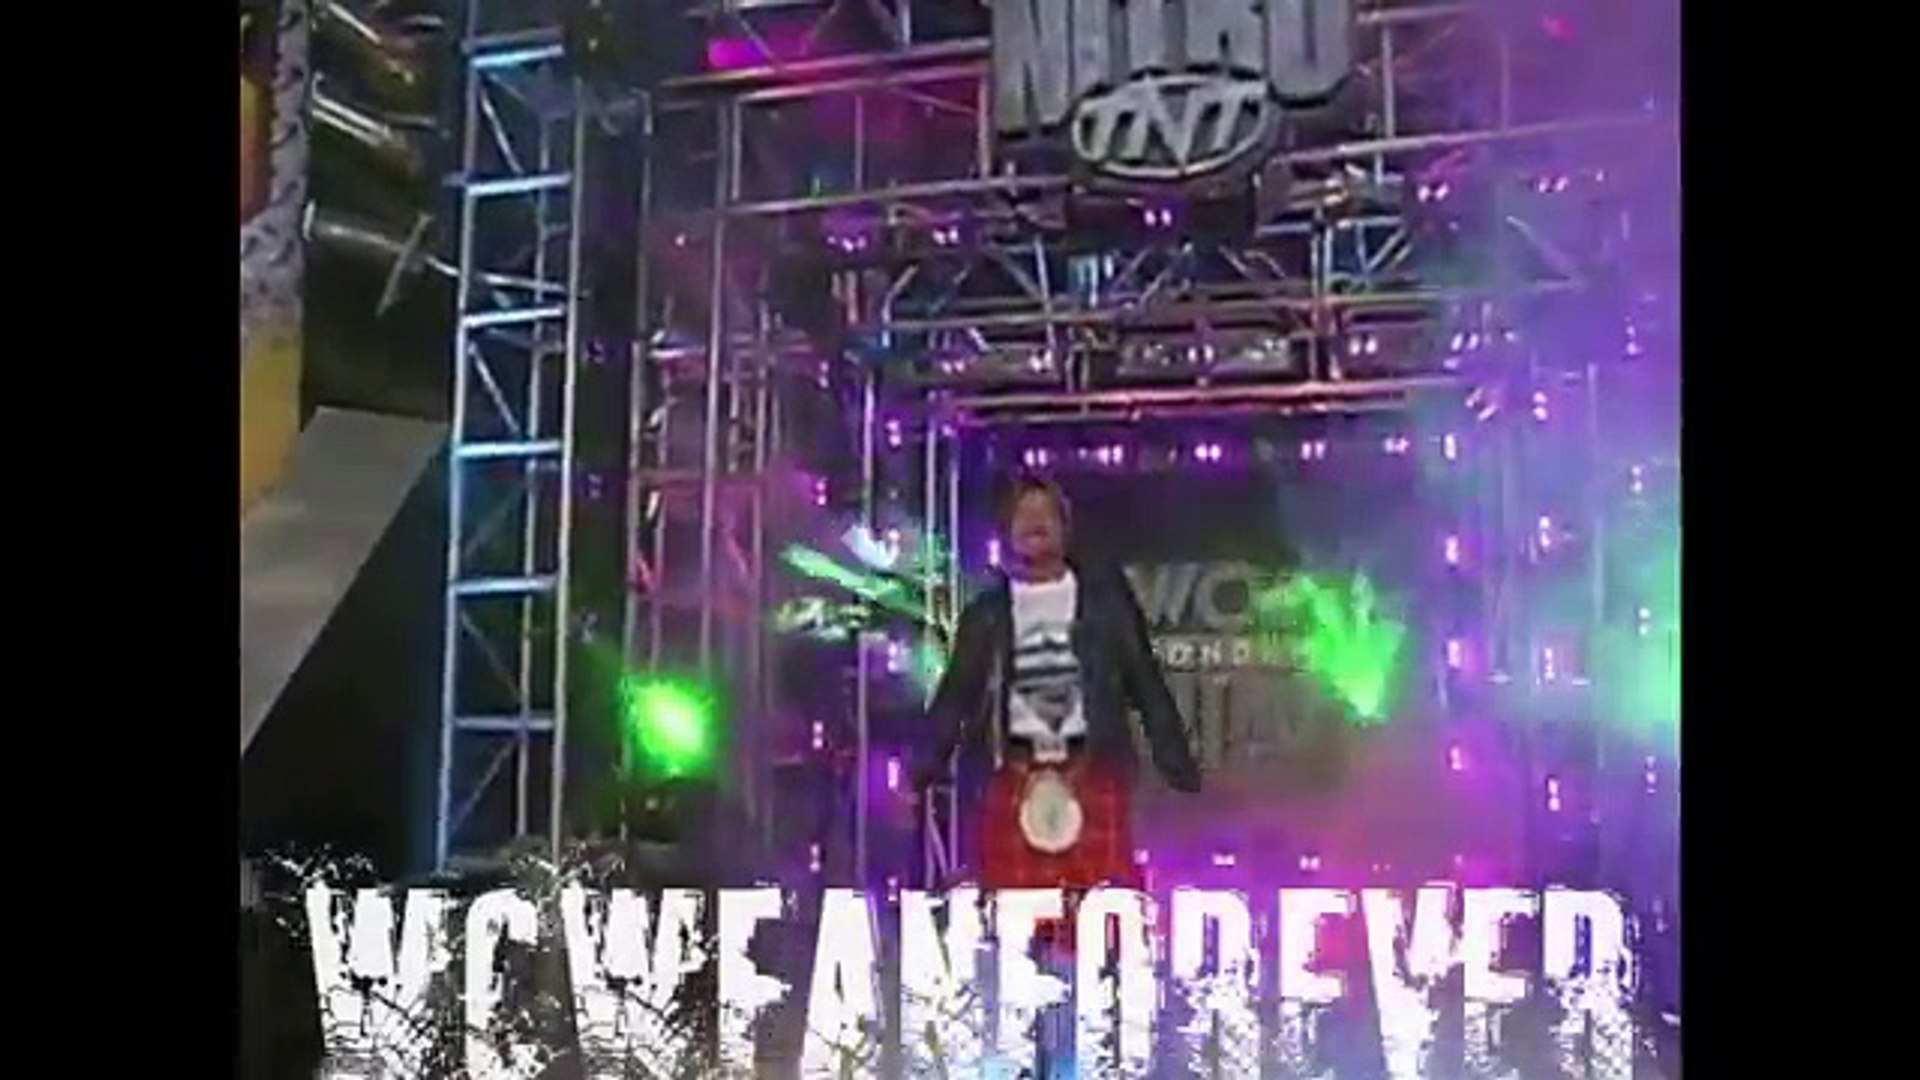 WCW Roddy Rowdy Piper 2nd Theme(With Custom Tron) RIP